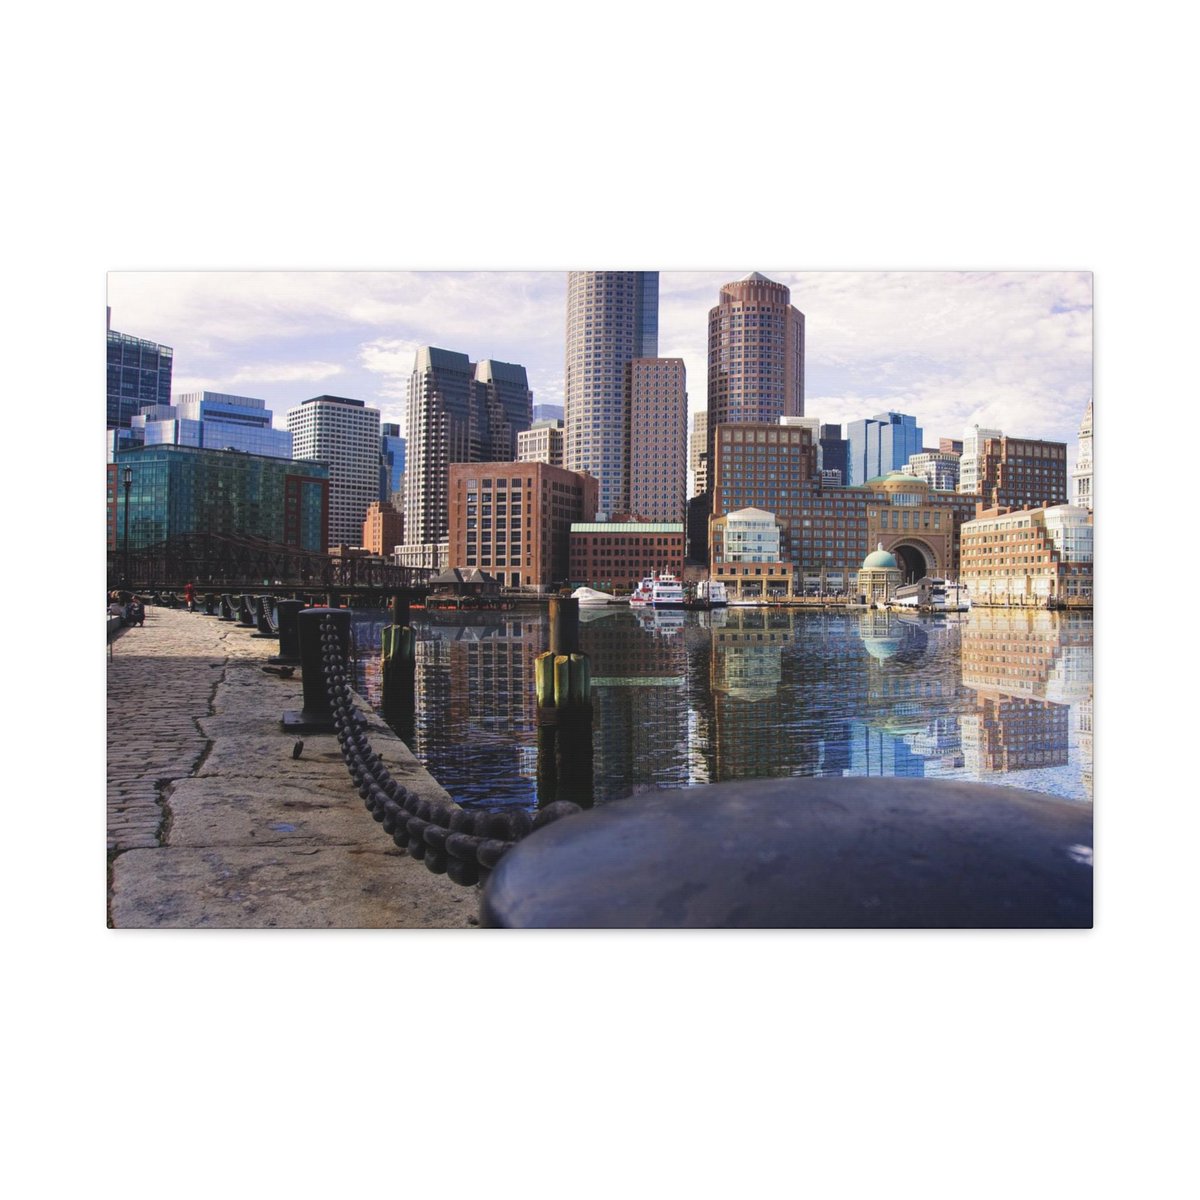 Boston Skyline Canvas Art - Cityscape Photography Wall Decor etsy.me/44m5yKr #printingprintmaking #abstractwallart #canvaspainting #modernhomedecor #printedartwork #uniquewalldecor #largecanvas #art #contemporaryart